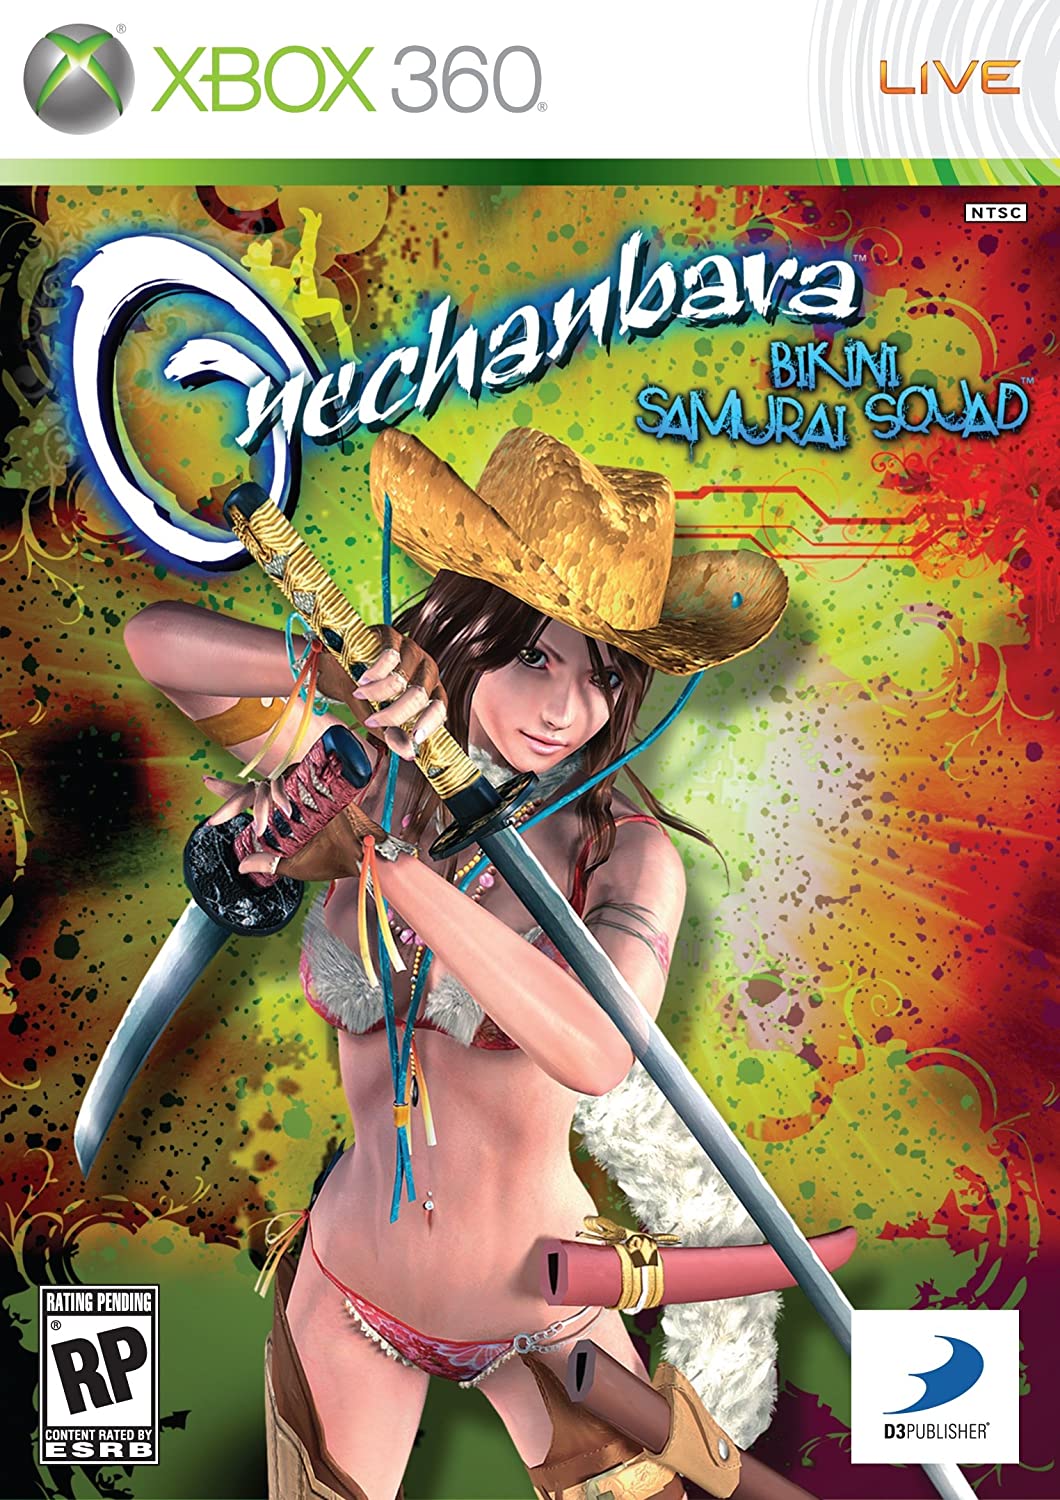 Onechanbara: Bikini Samurai Squad player count stats